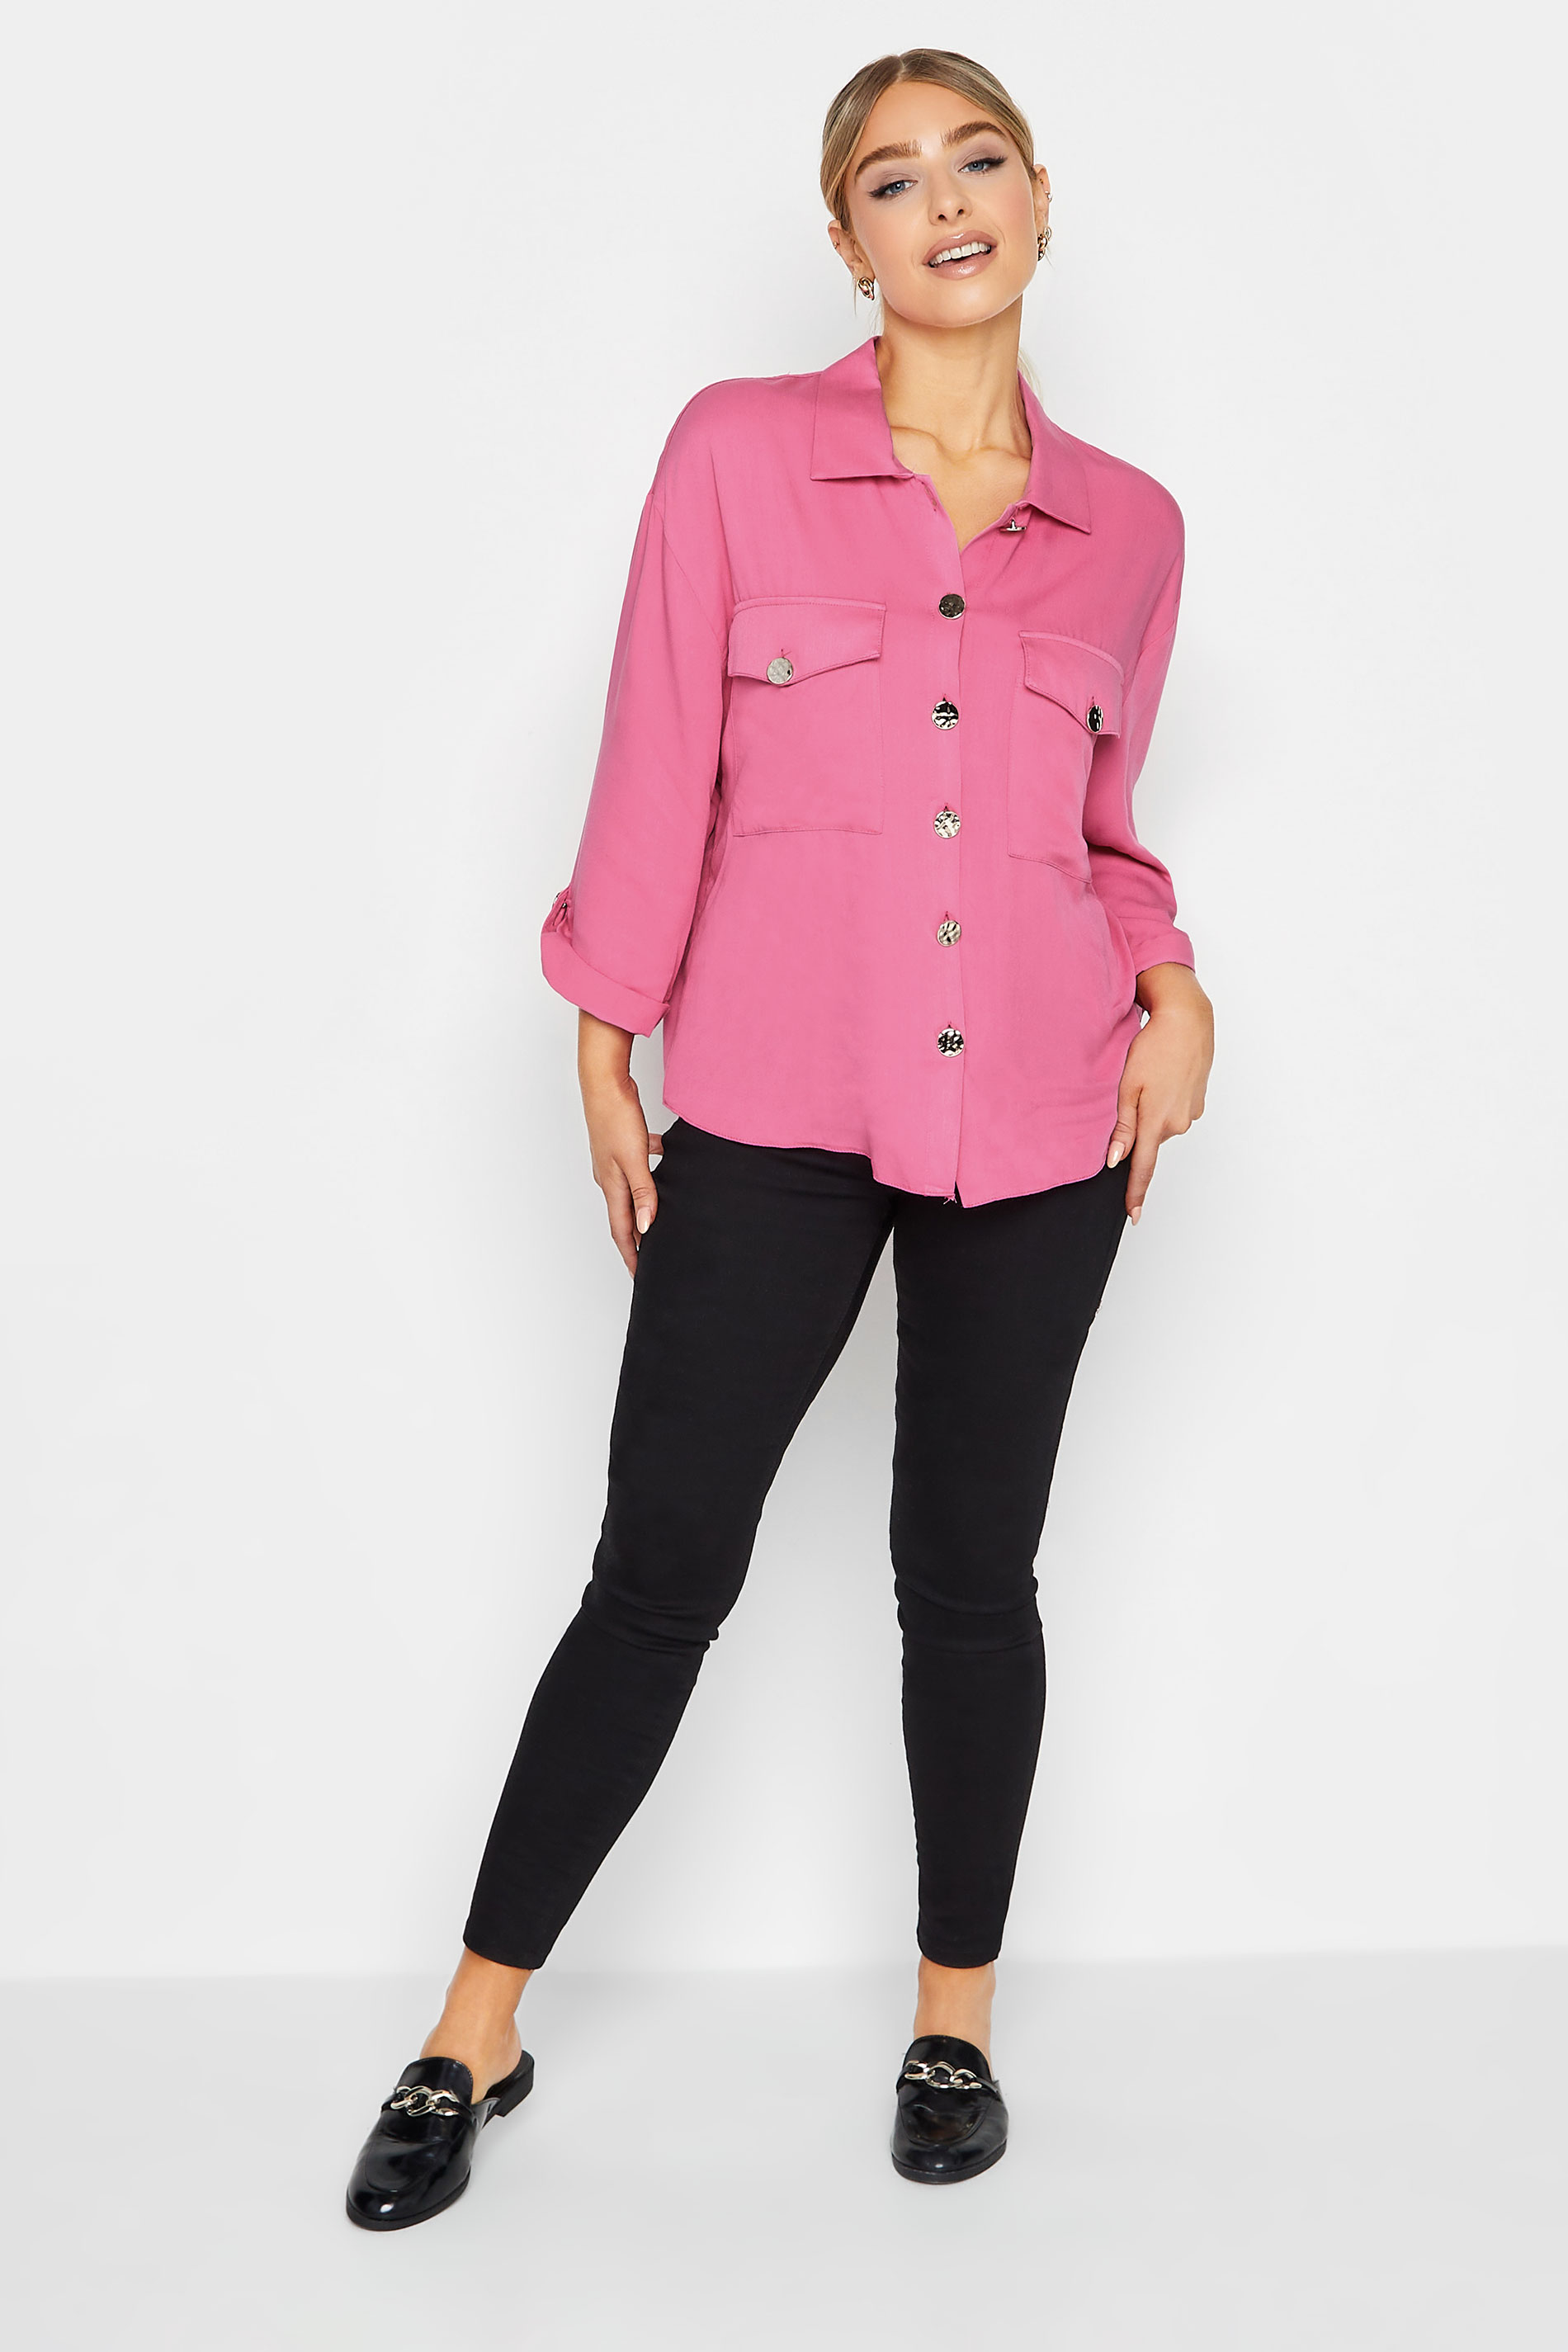 M&Co Pink Statement Button Shirt | M&Co 2